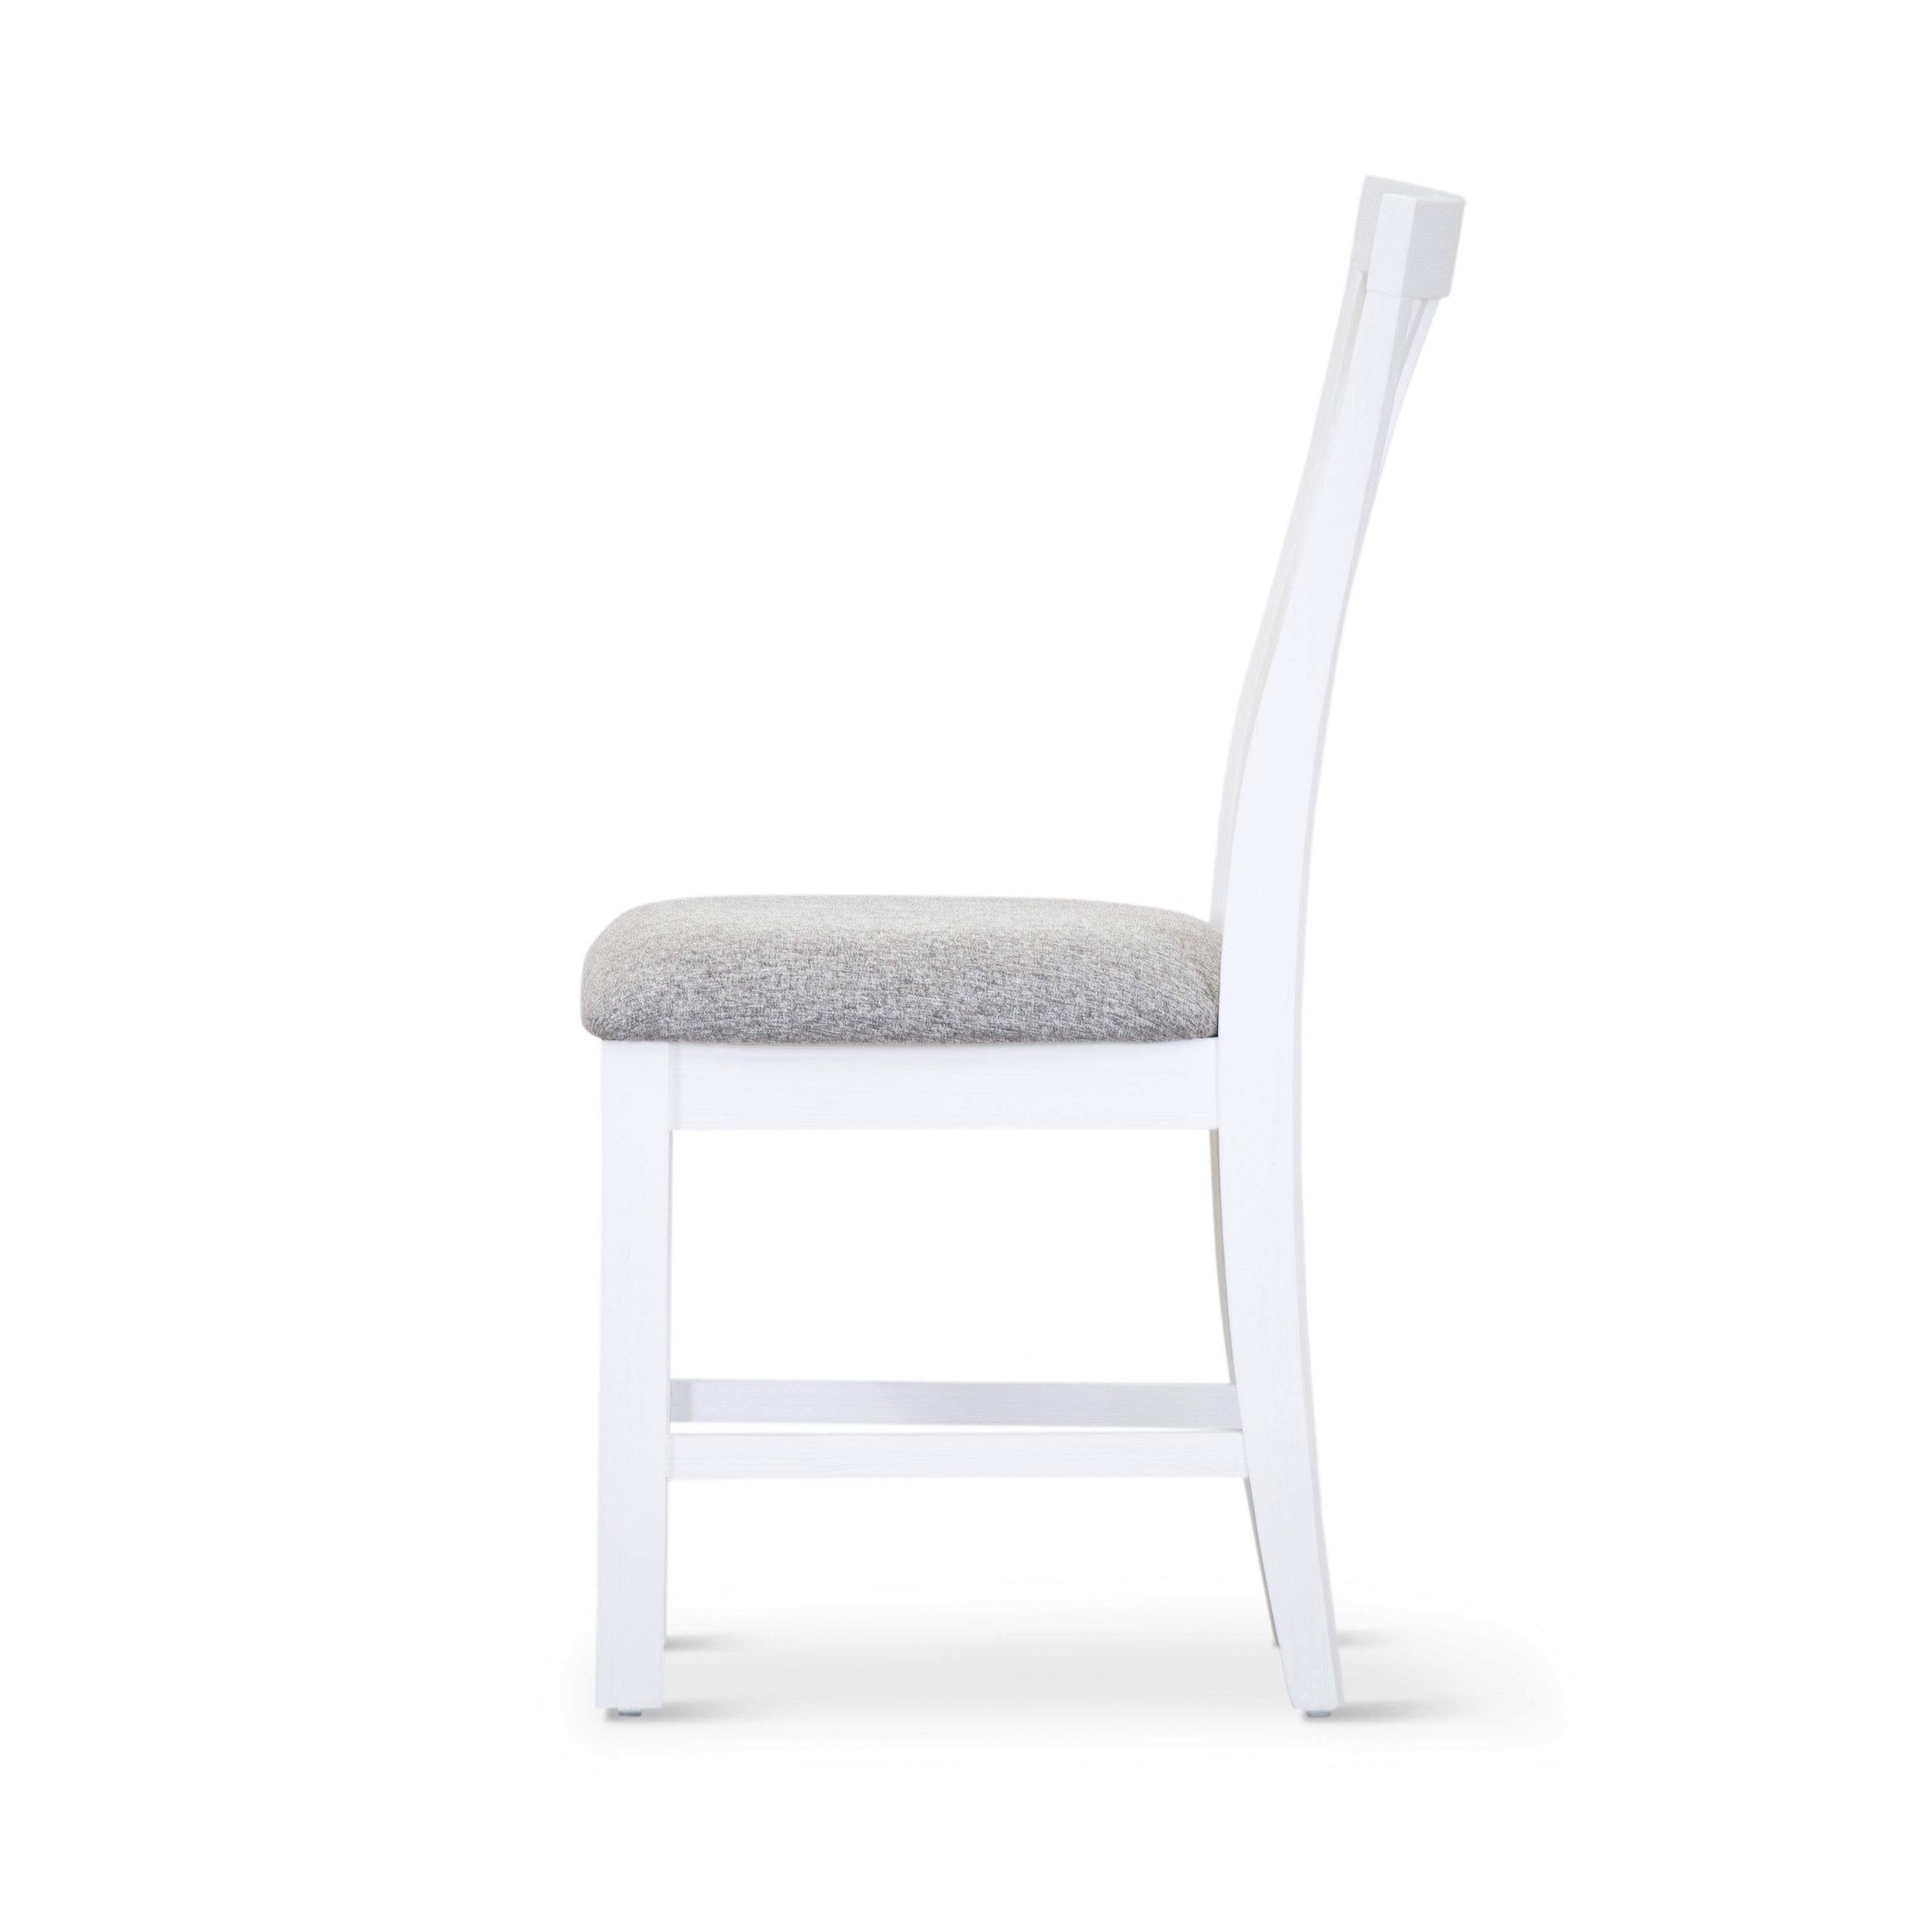 Laelia Dining Chair Set of 8 Solid Acacia Timber Wood Coastal Furniture - White